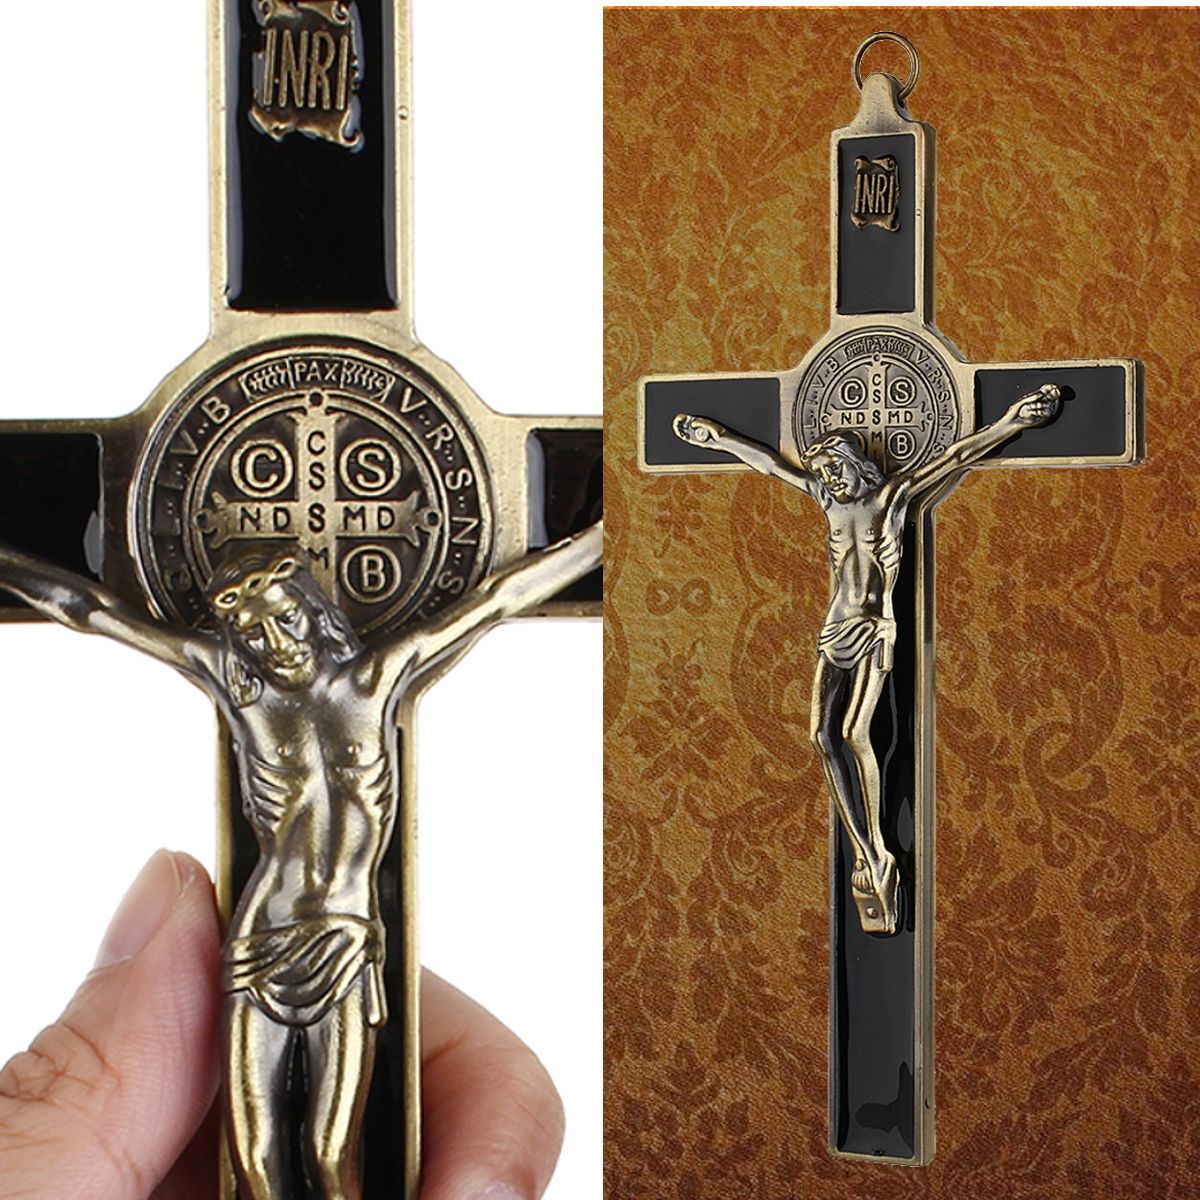 Jesus-Christ-Wall-Hanging-Crucifix-Cross-Religious-Saint-3D-Craft-Decorations-1364774